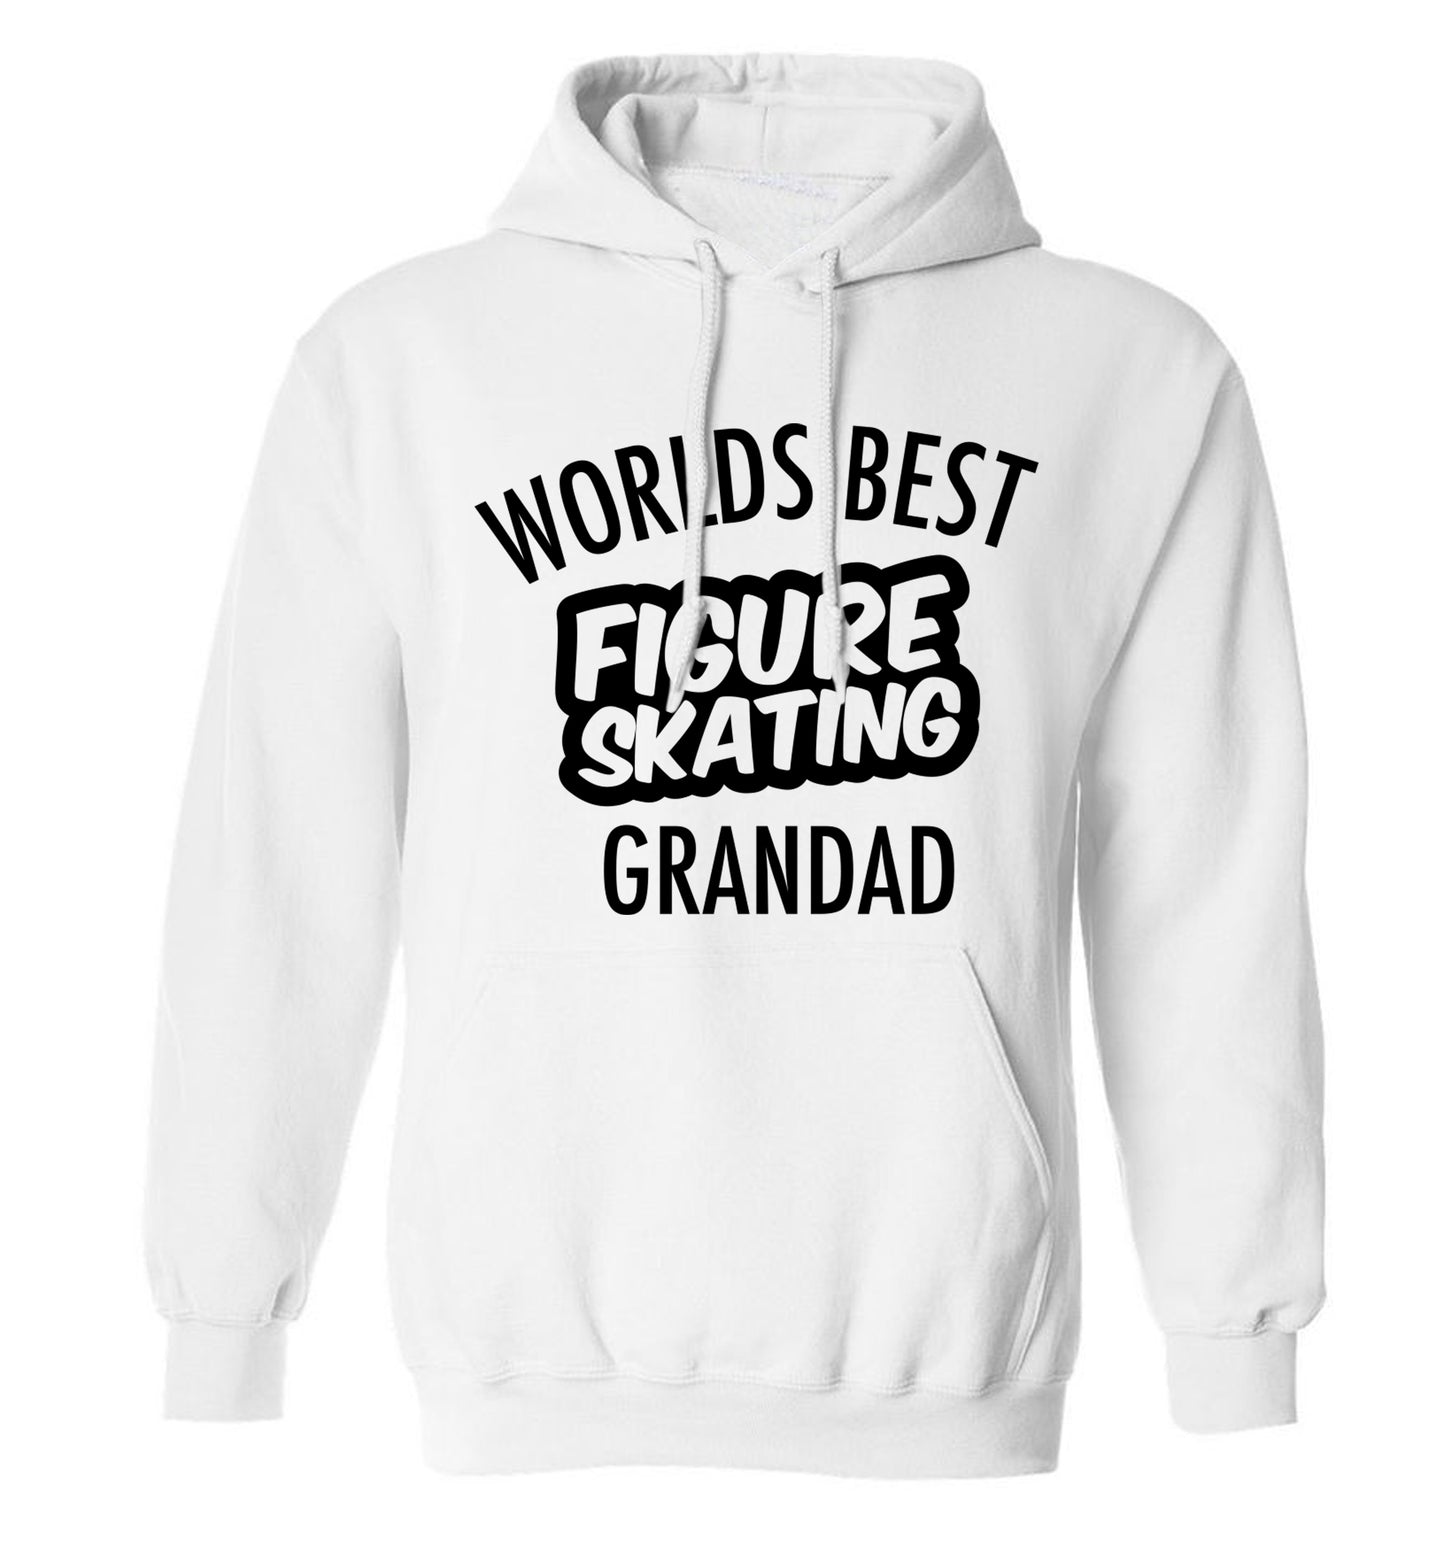 Worlds best figure skating grandad adults unisexwhite hoodie 2XL